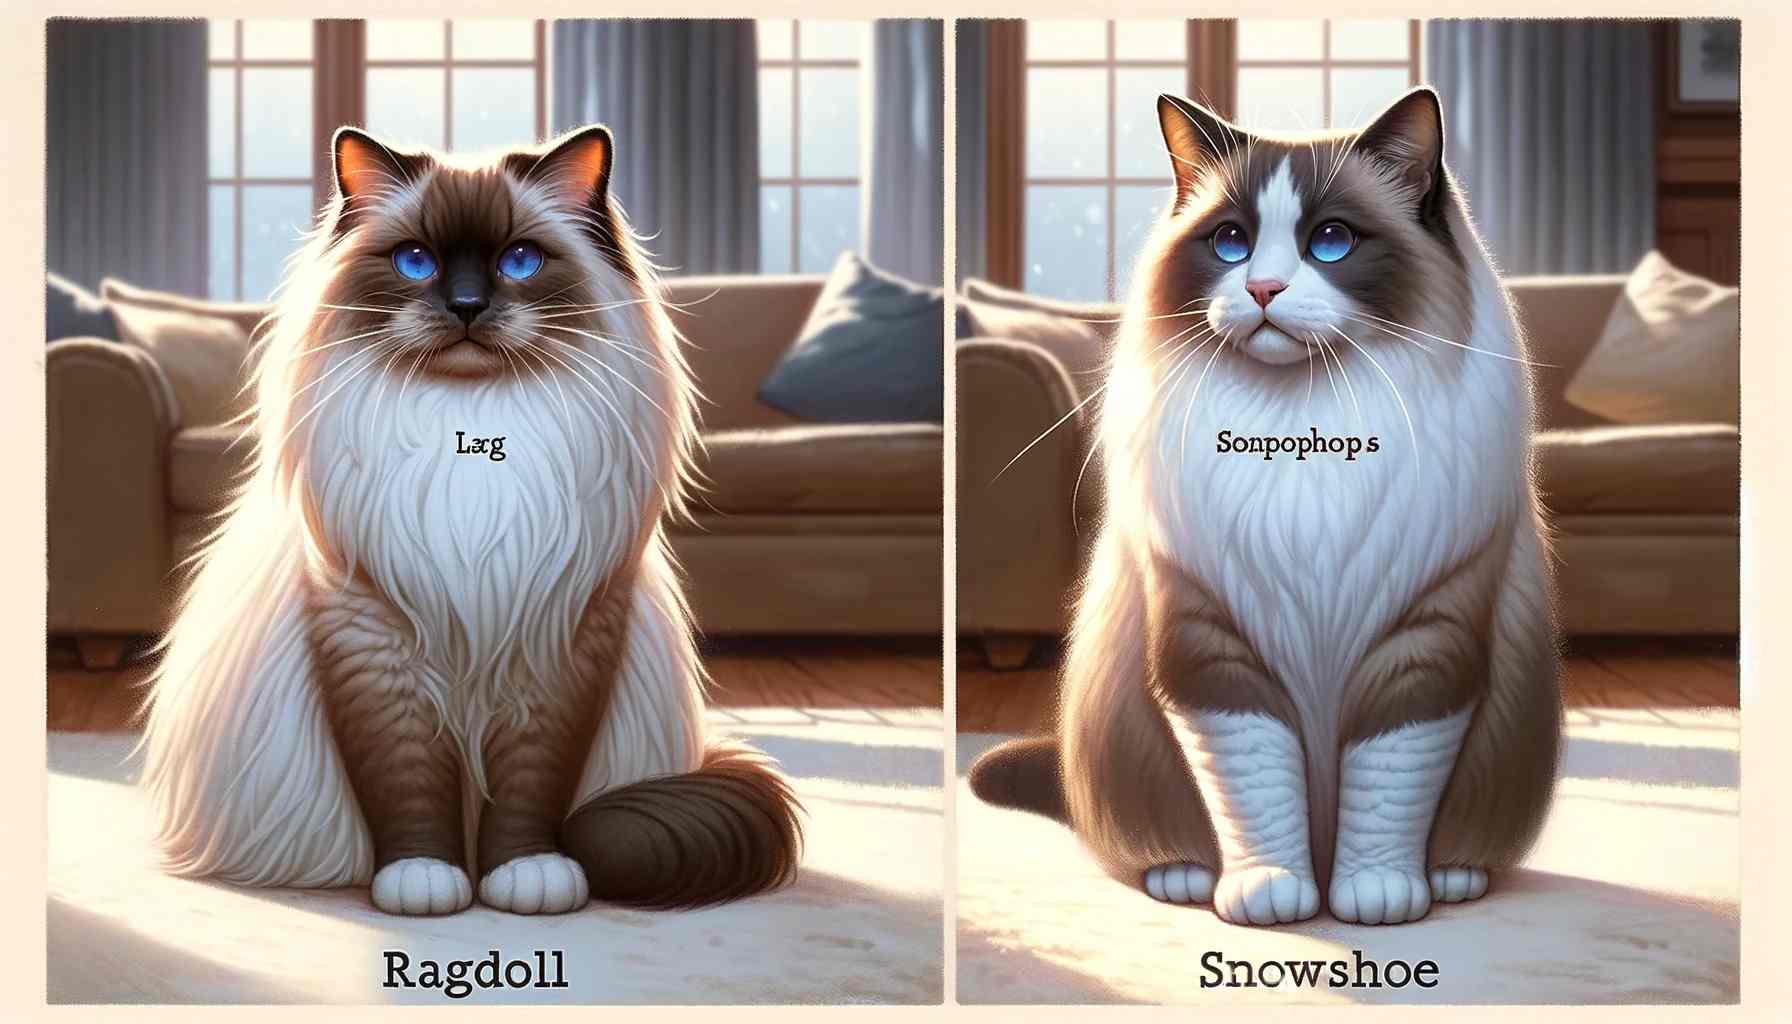 Ragdoll vs Snowshoe Cat